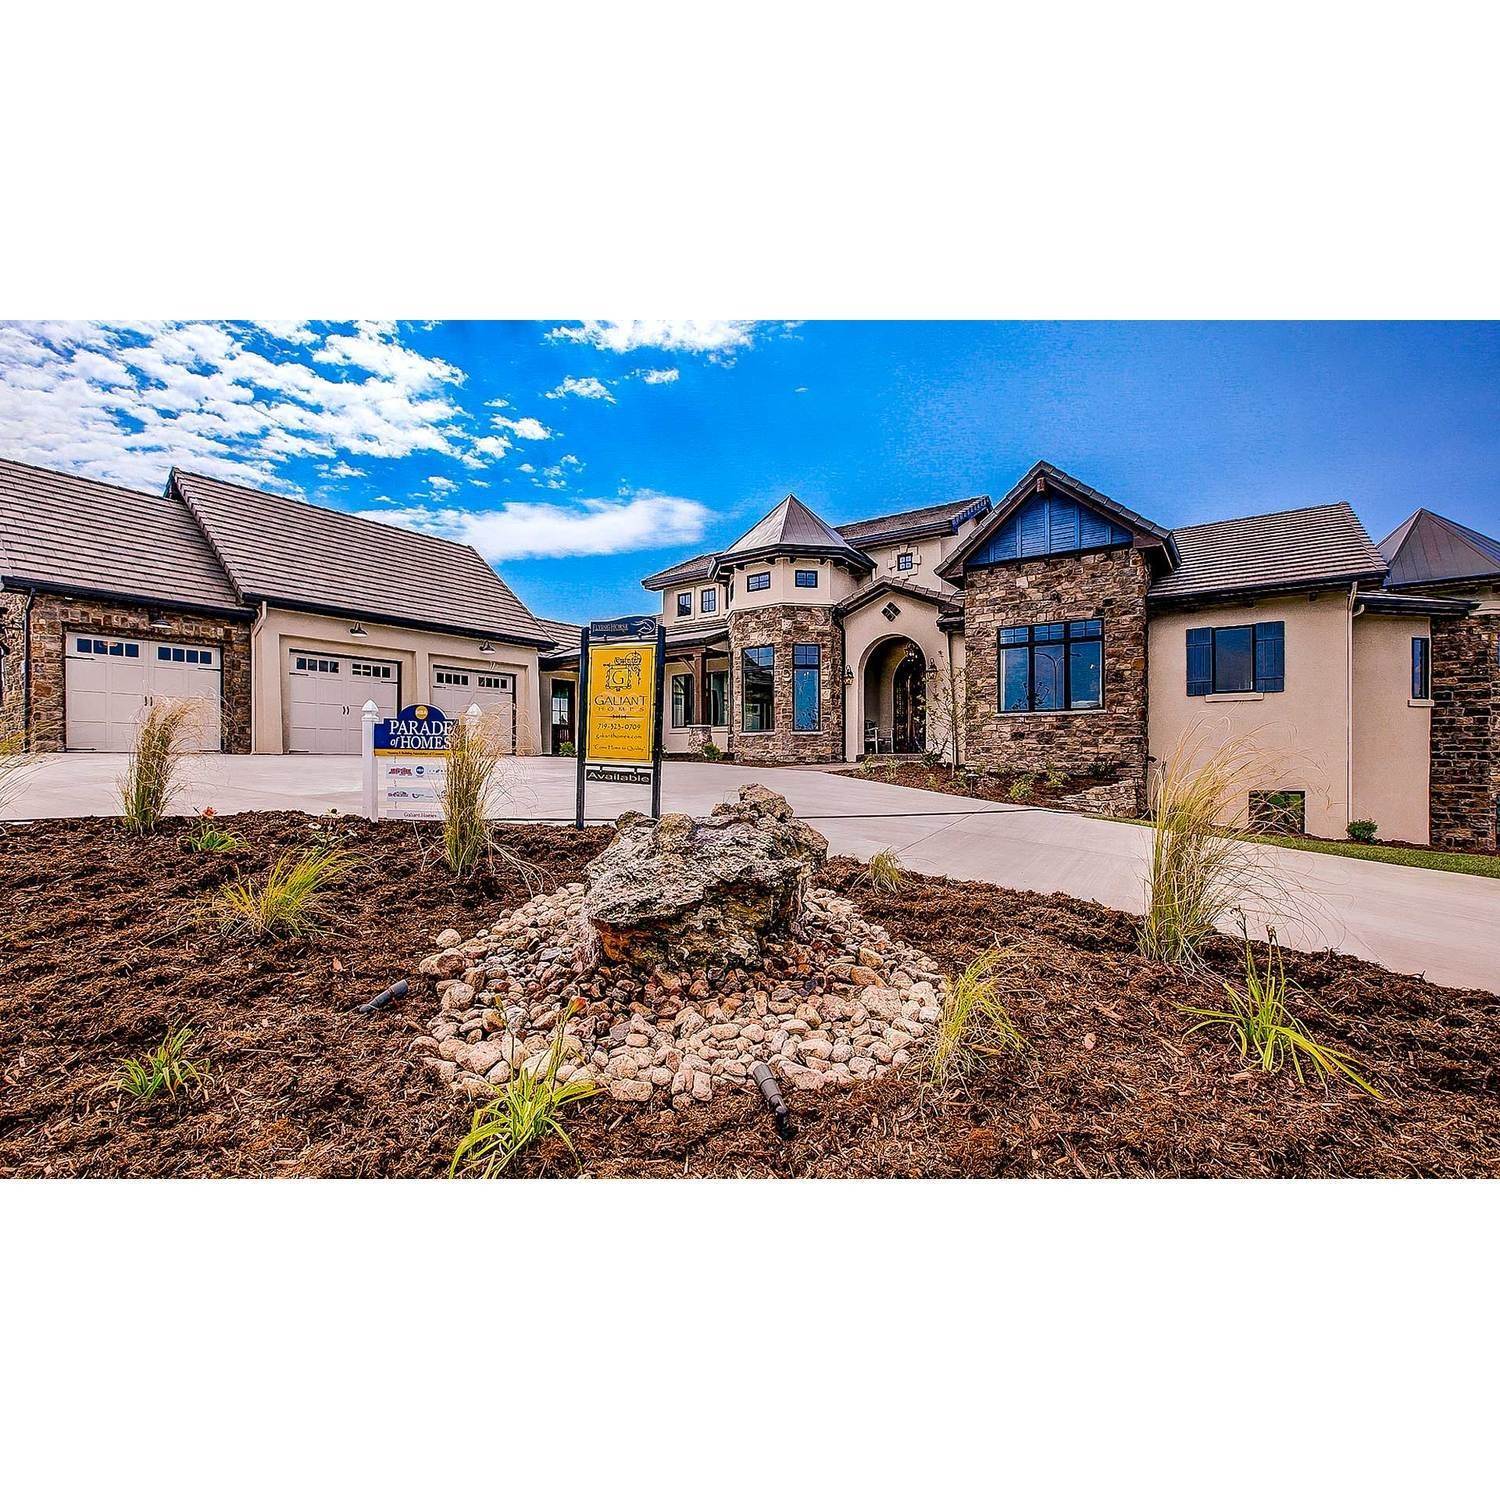 19. Galiant Homes gebouw op 4783 Farmingdale Dr, Colorado Springs, CO 80918